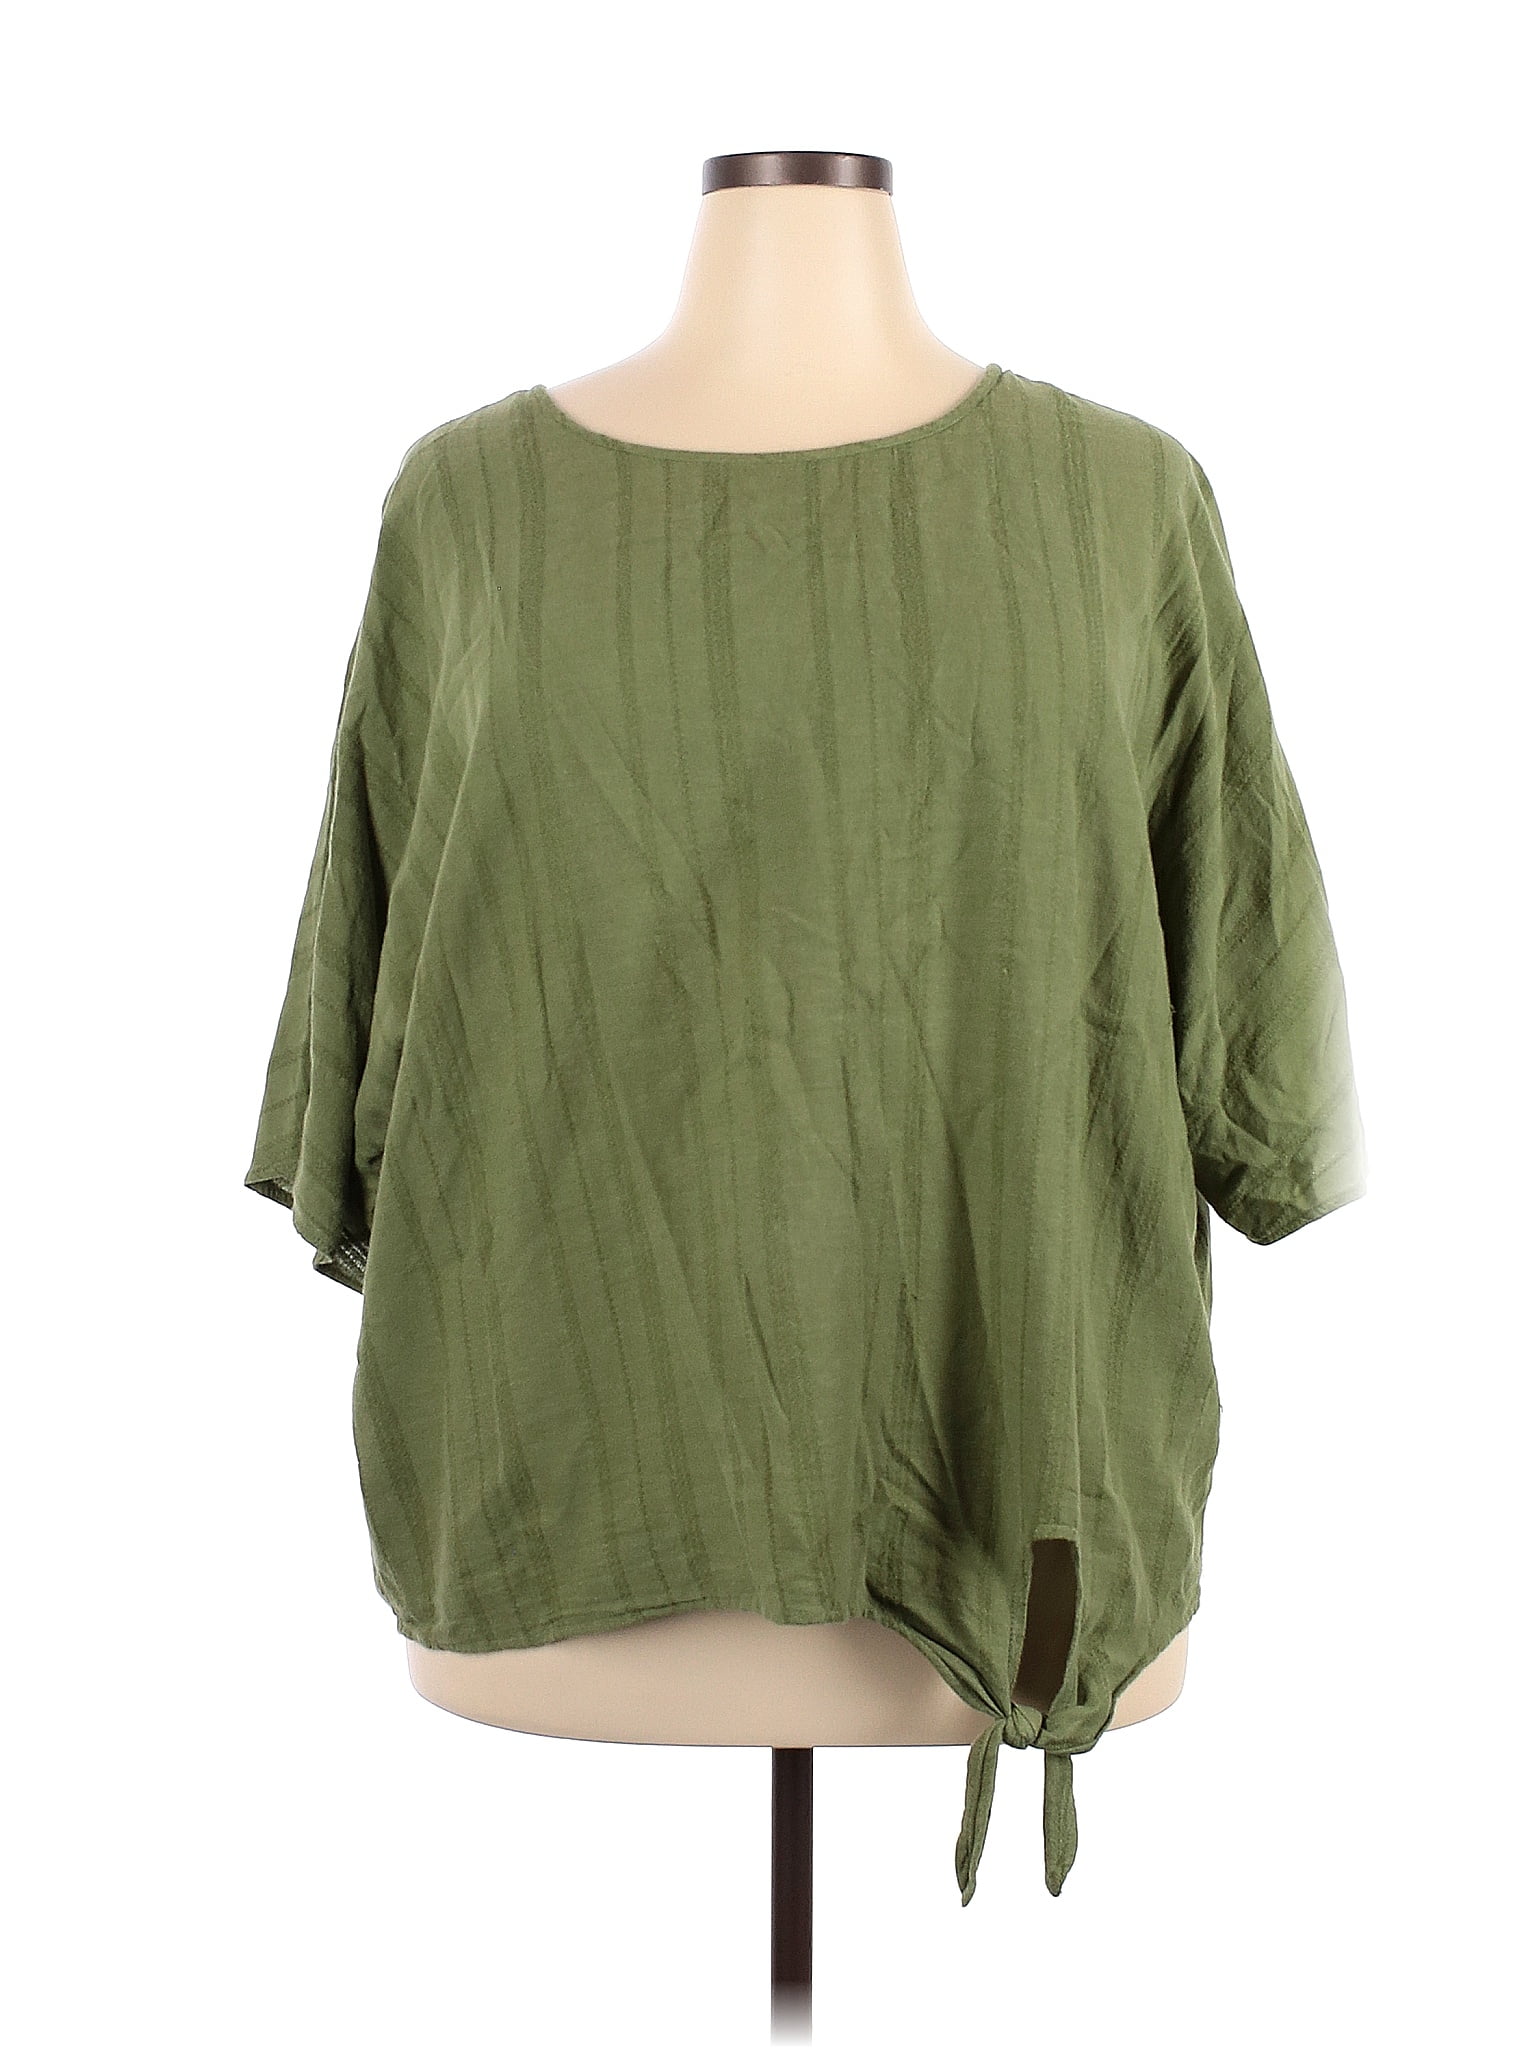 Walmart Solid Green Short Sleeve Blouse Size 20 (Plus) - 42% off | ThredUp